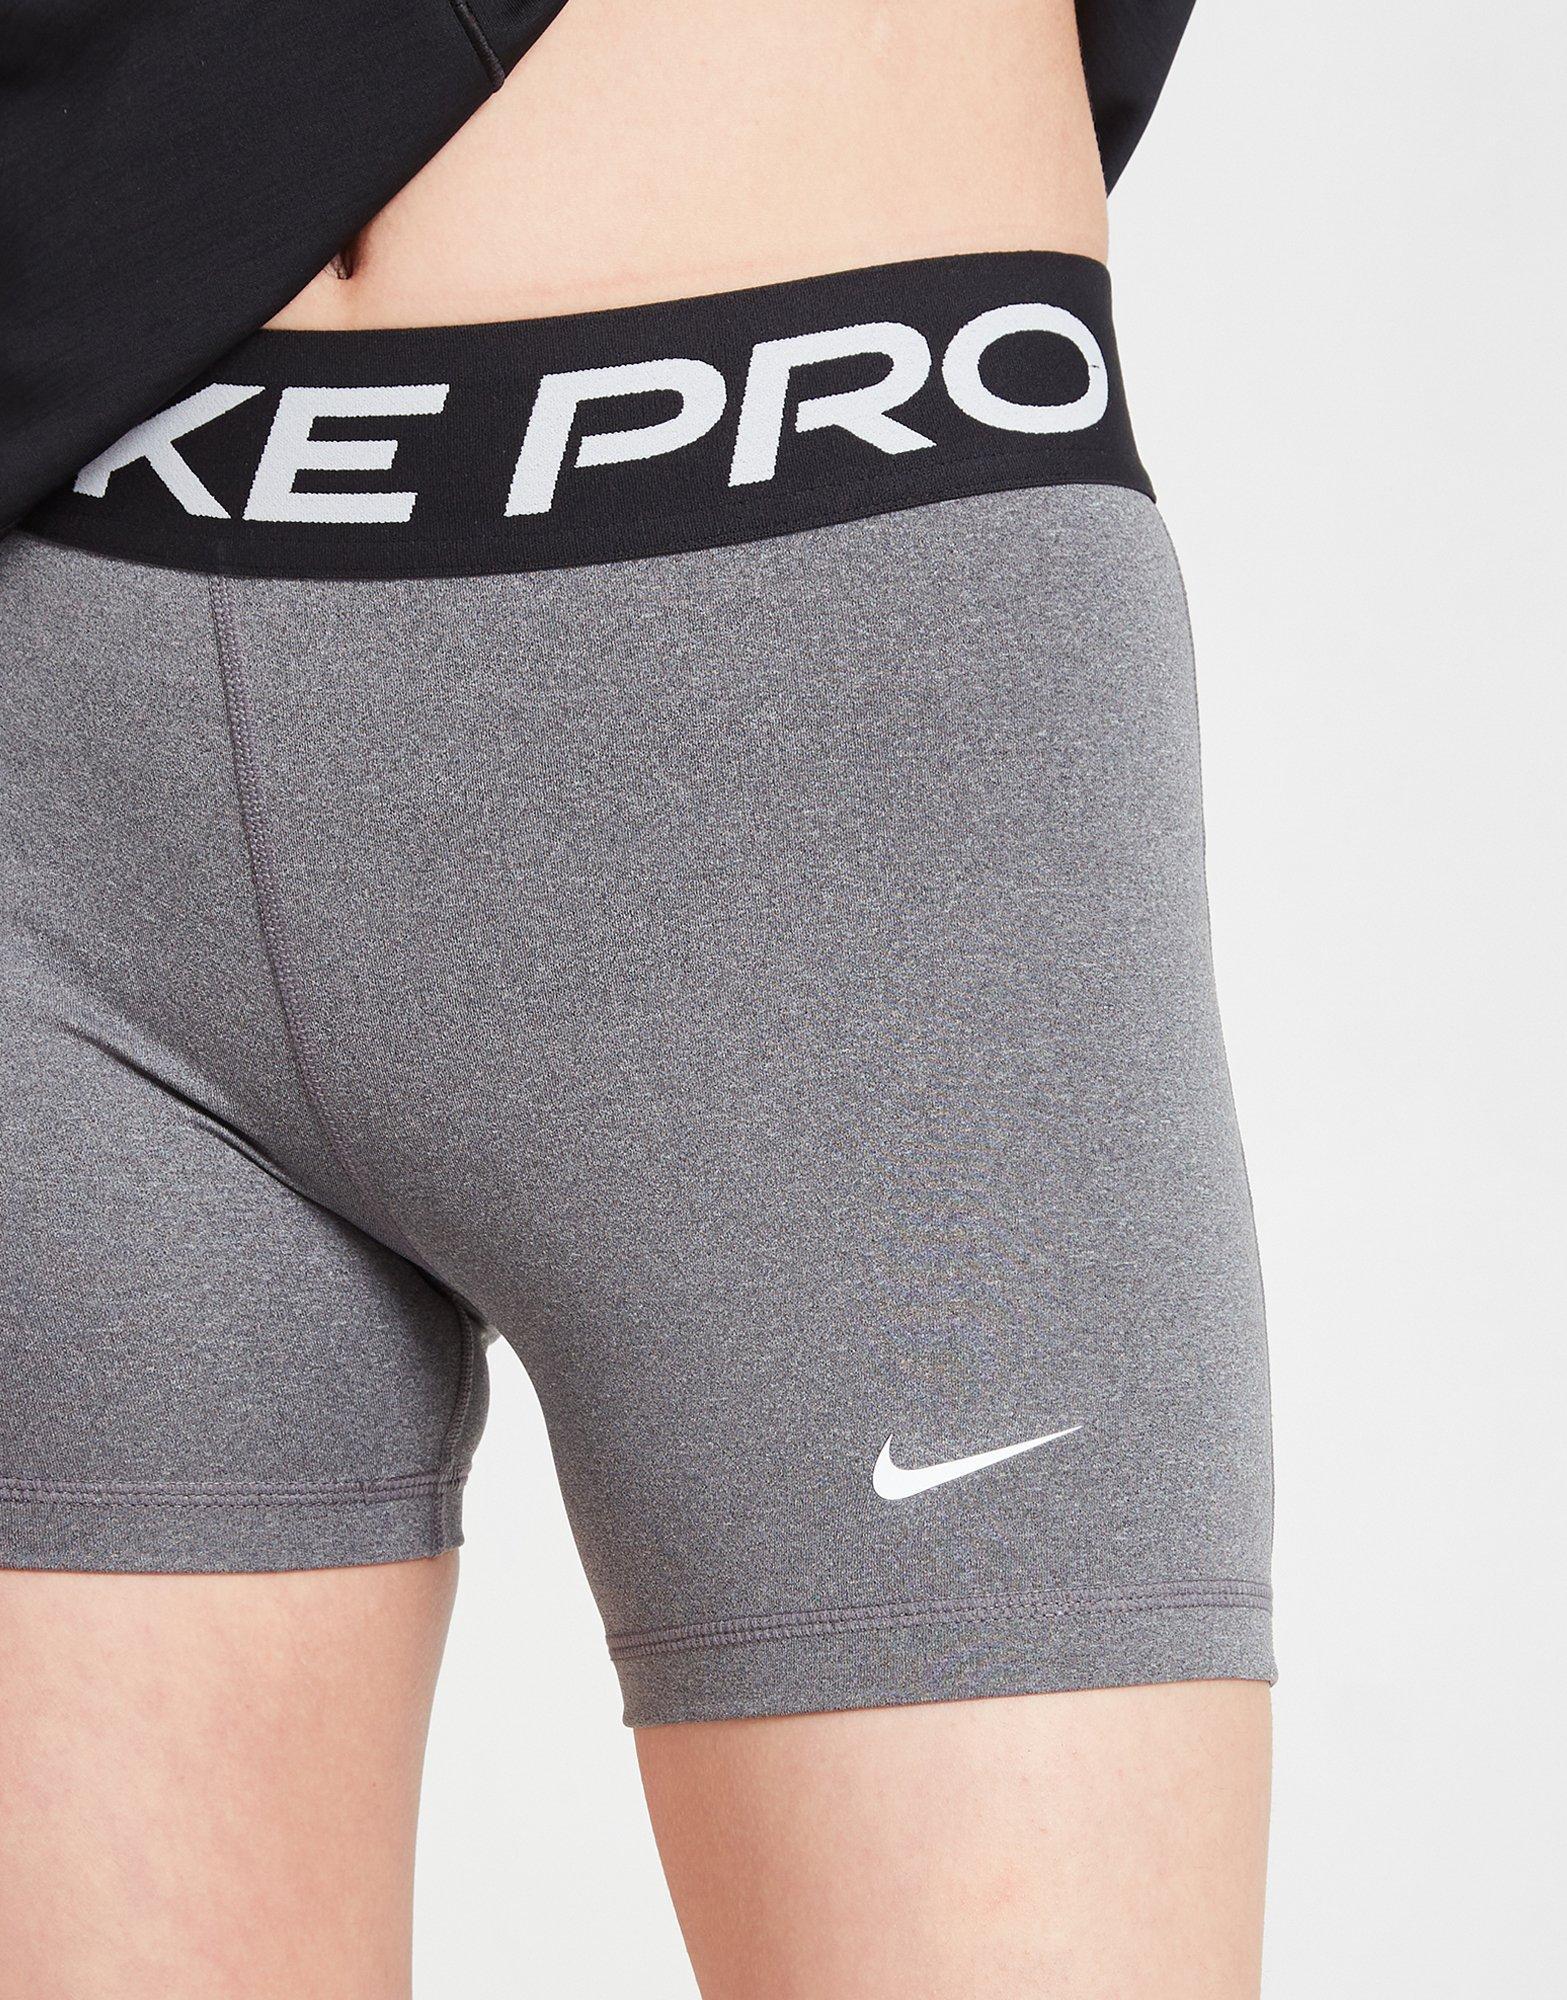 Nike Pro Girls' Short Carbonheather/grey